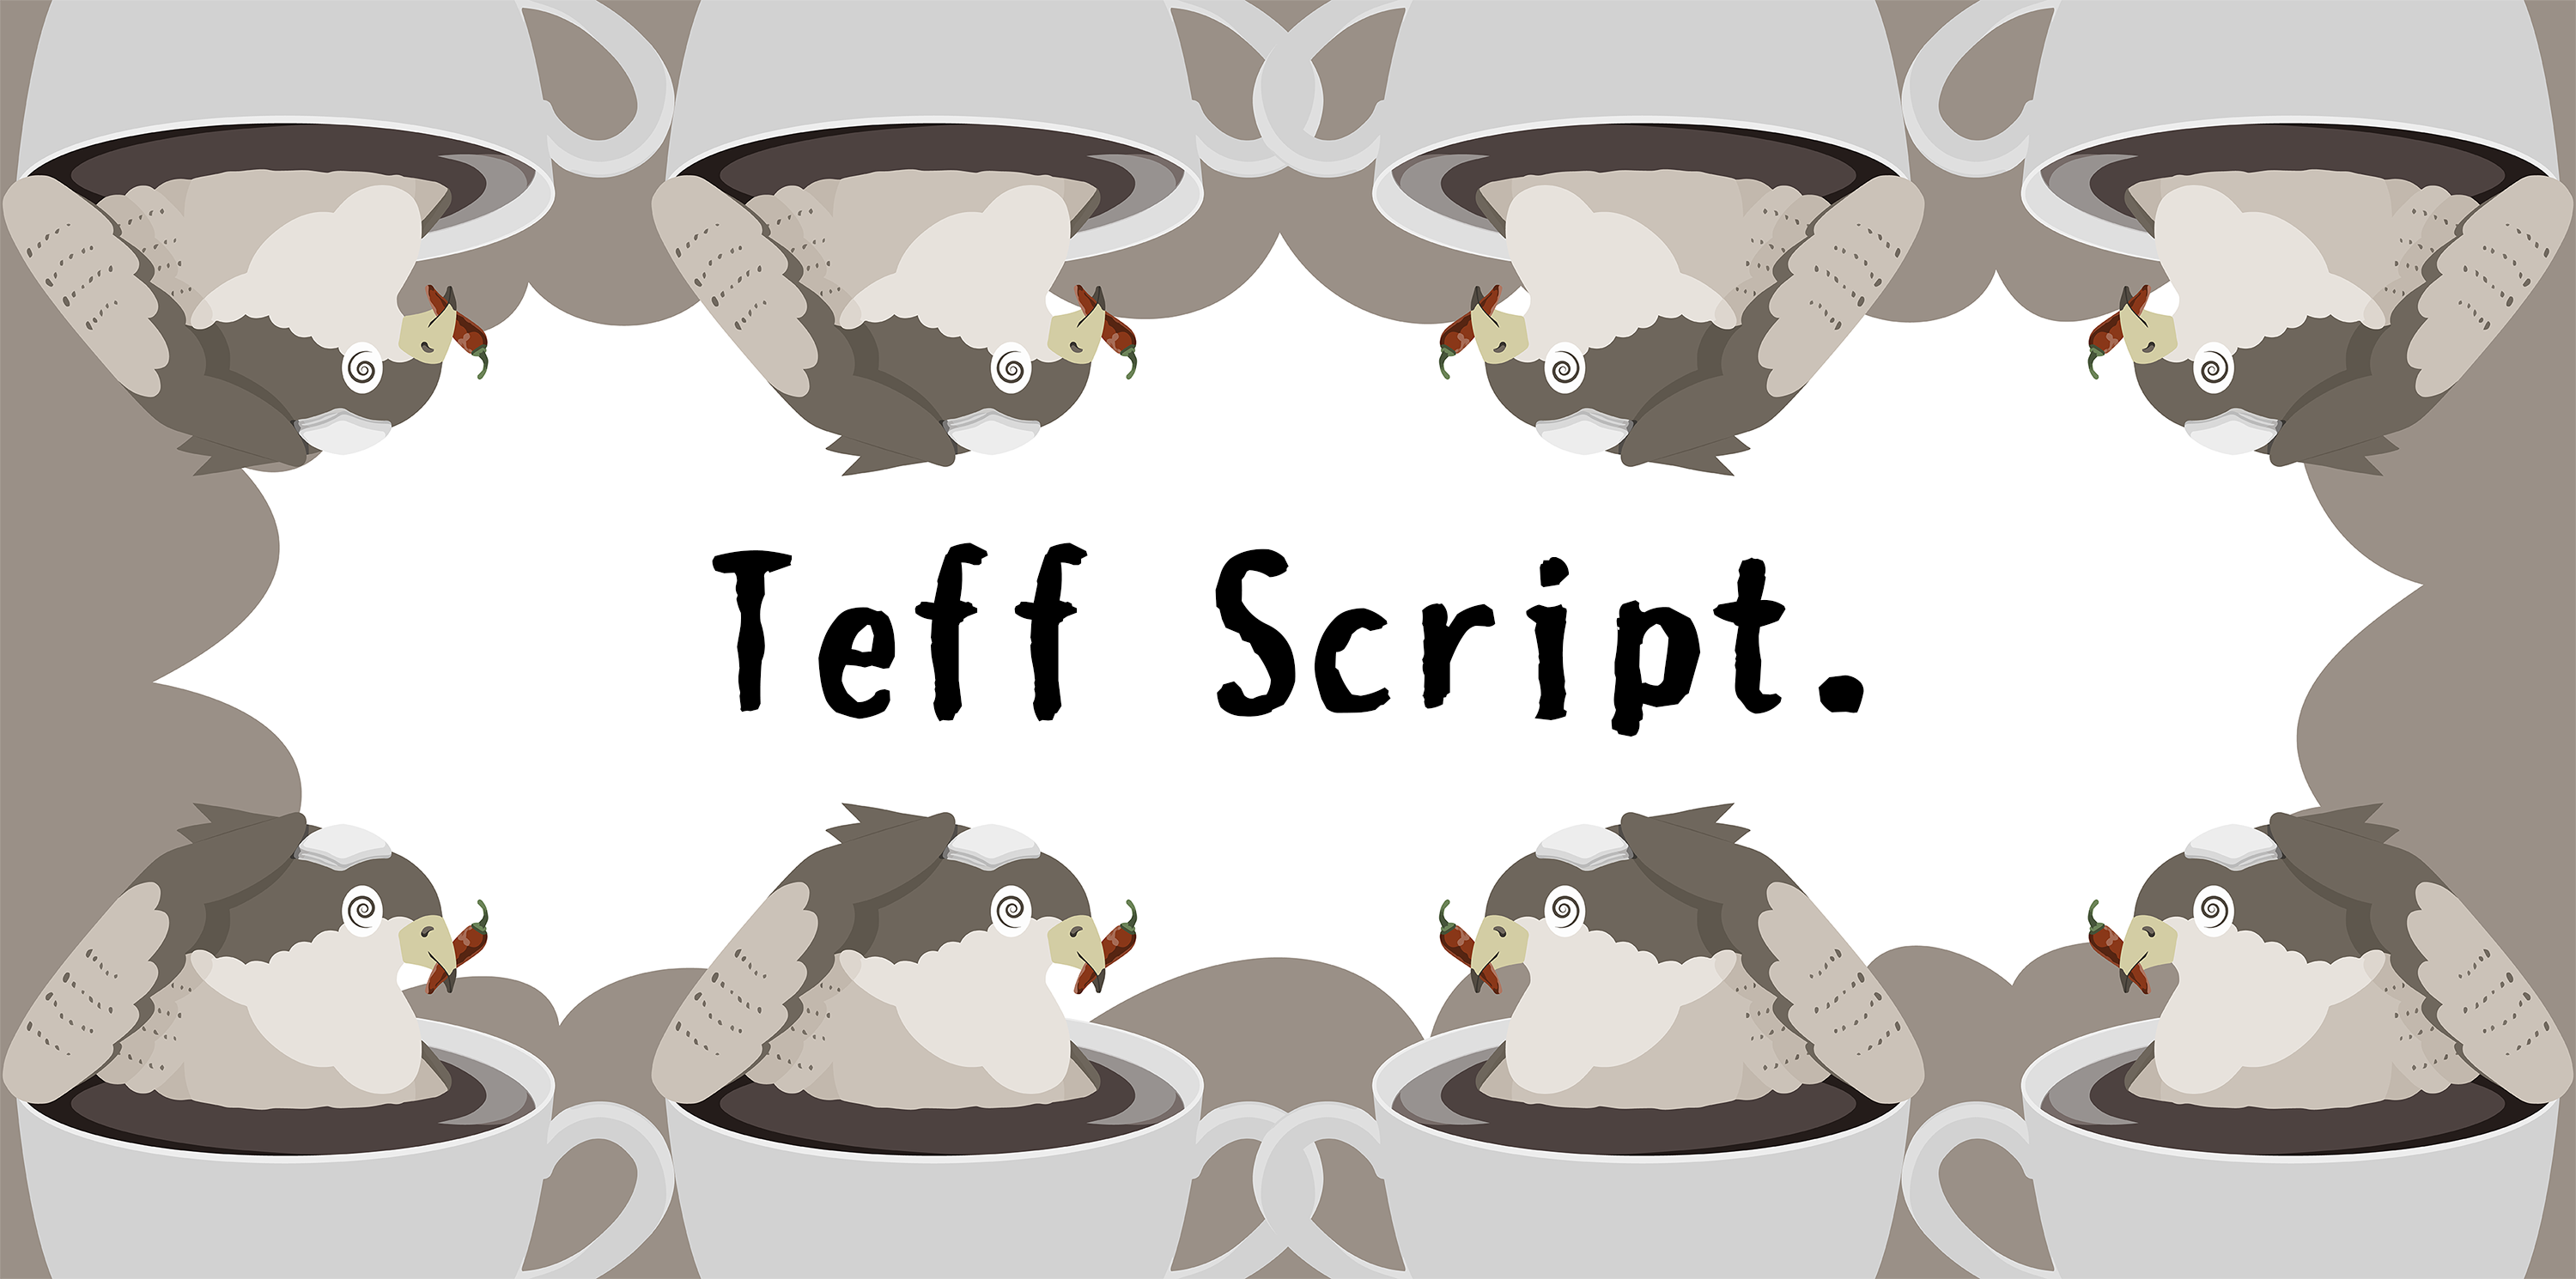 Teff Script.